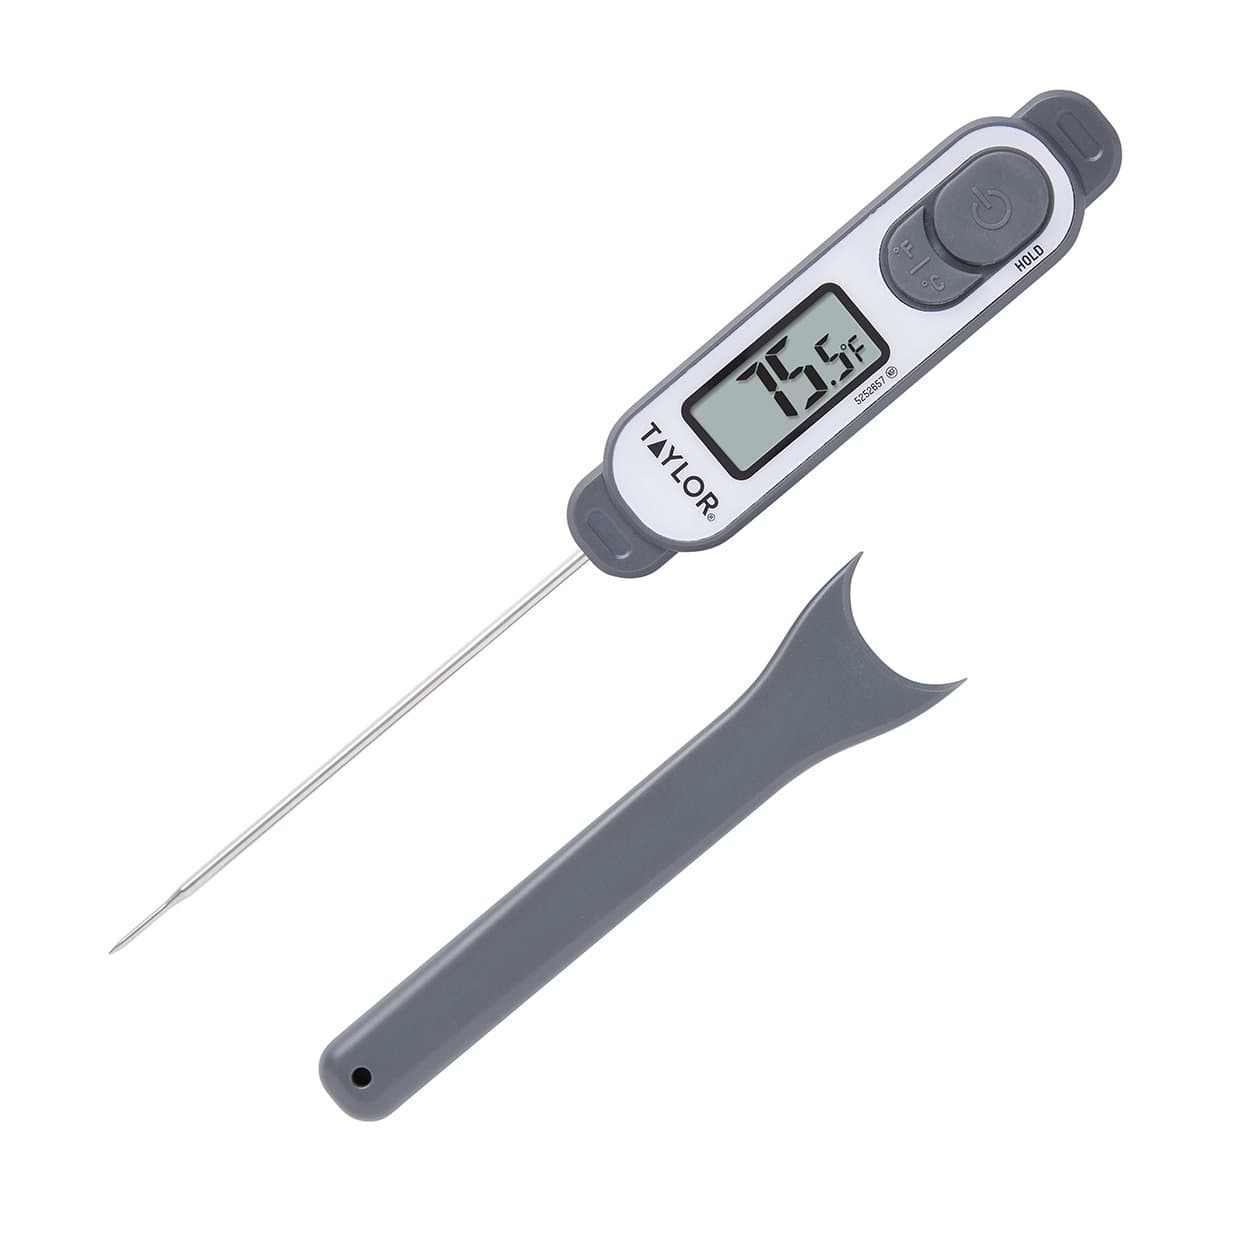 Digital Thermocouple Temperature Thermometer, Thermometer